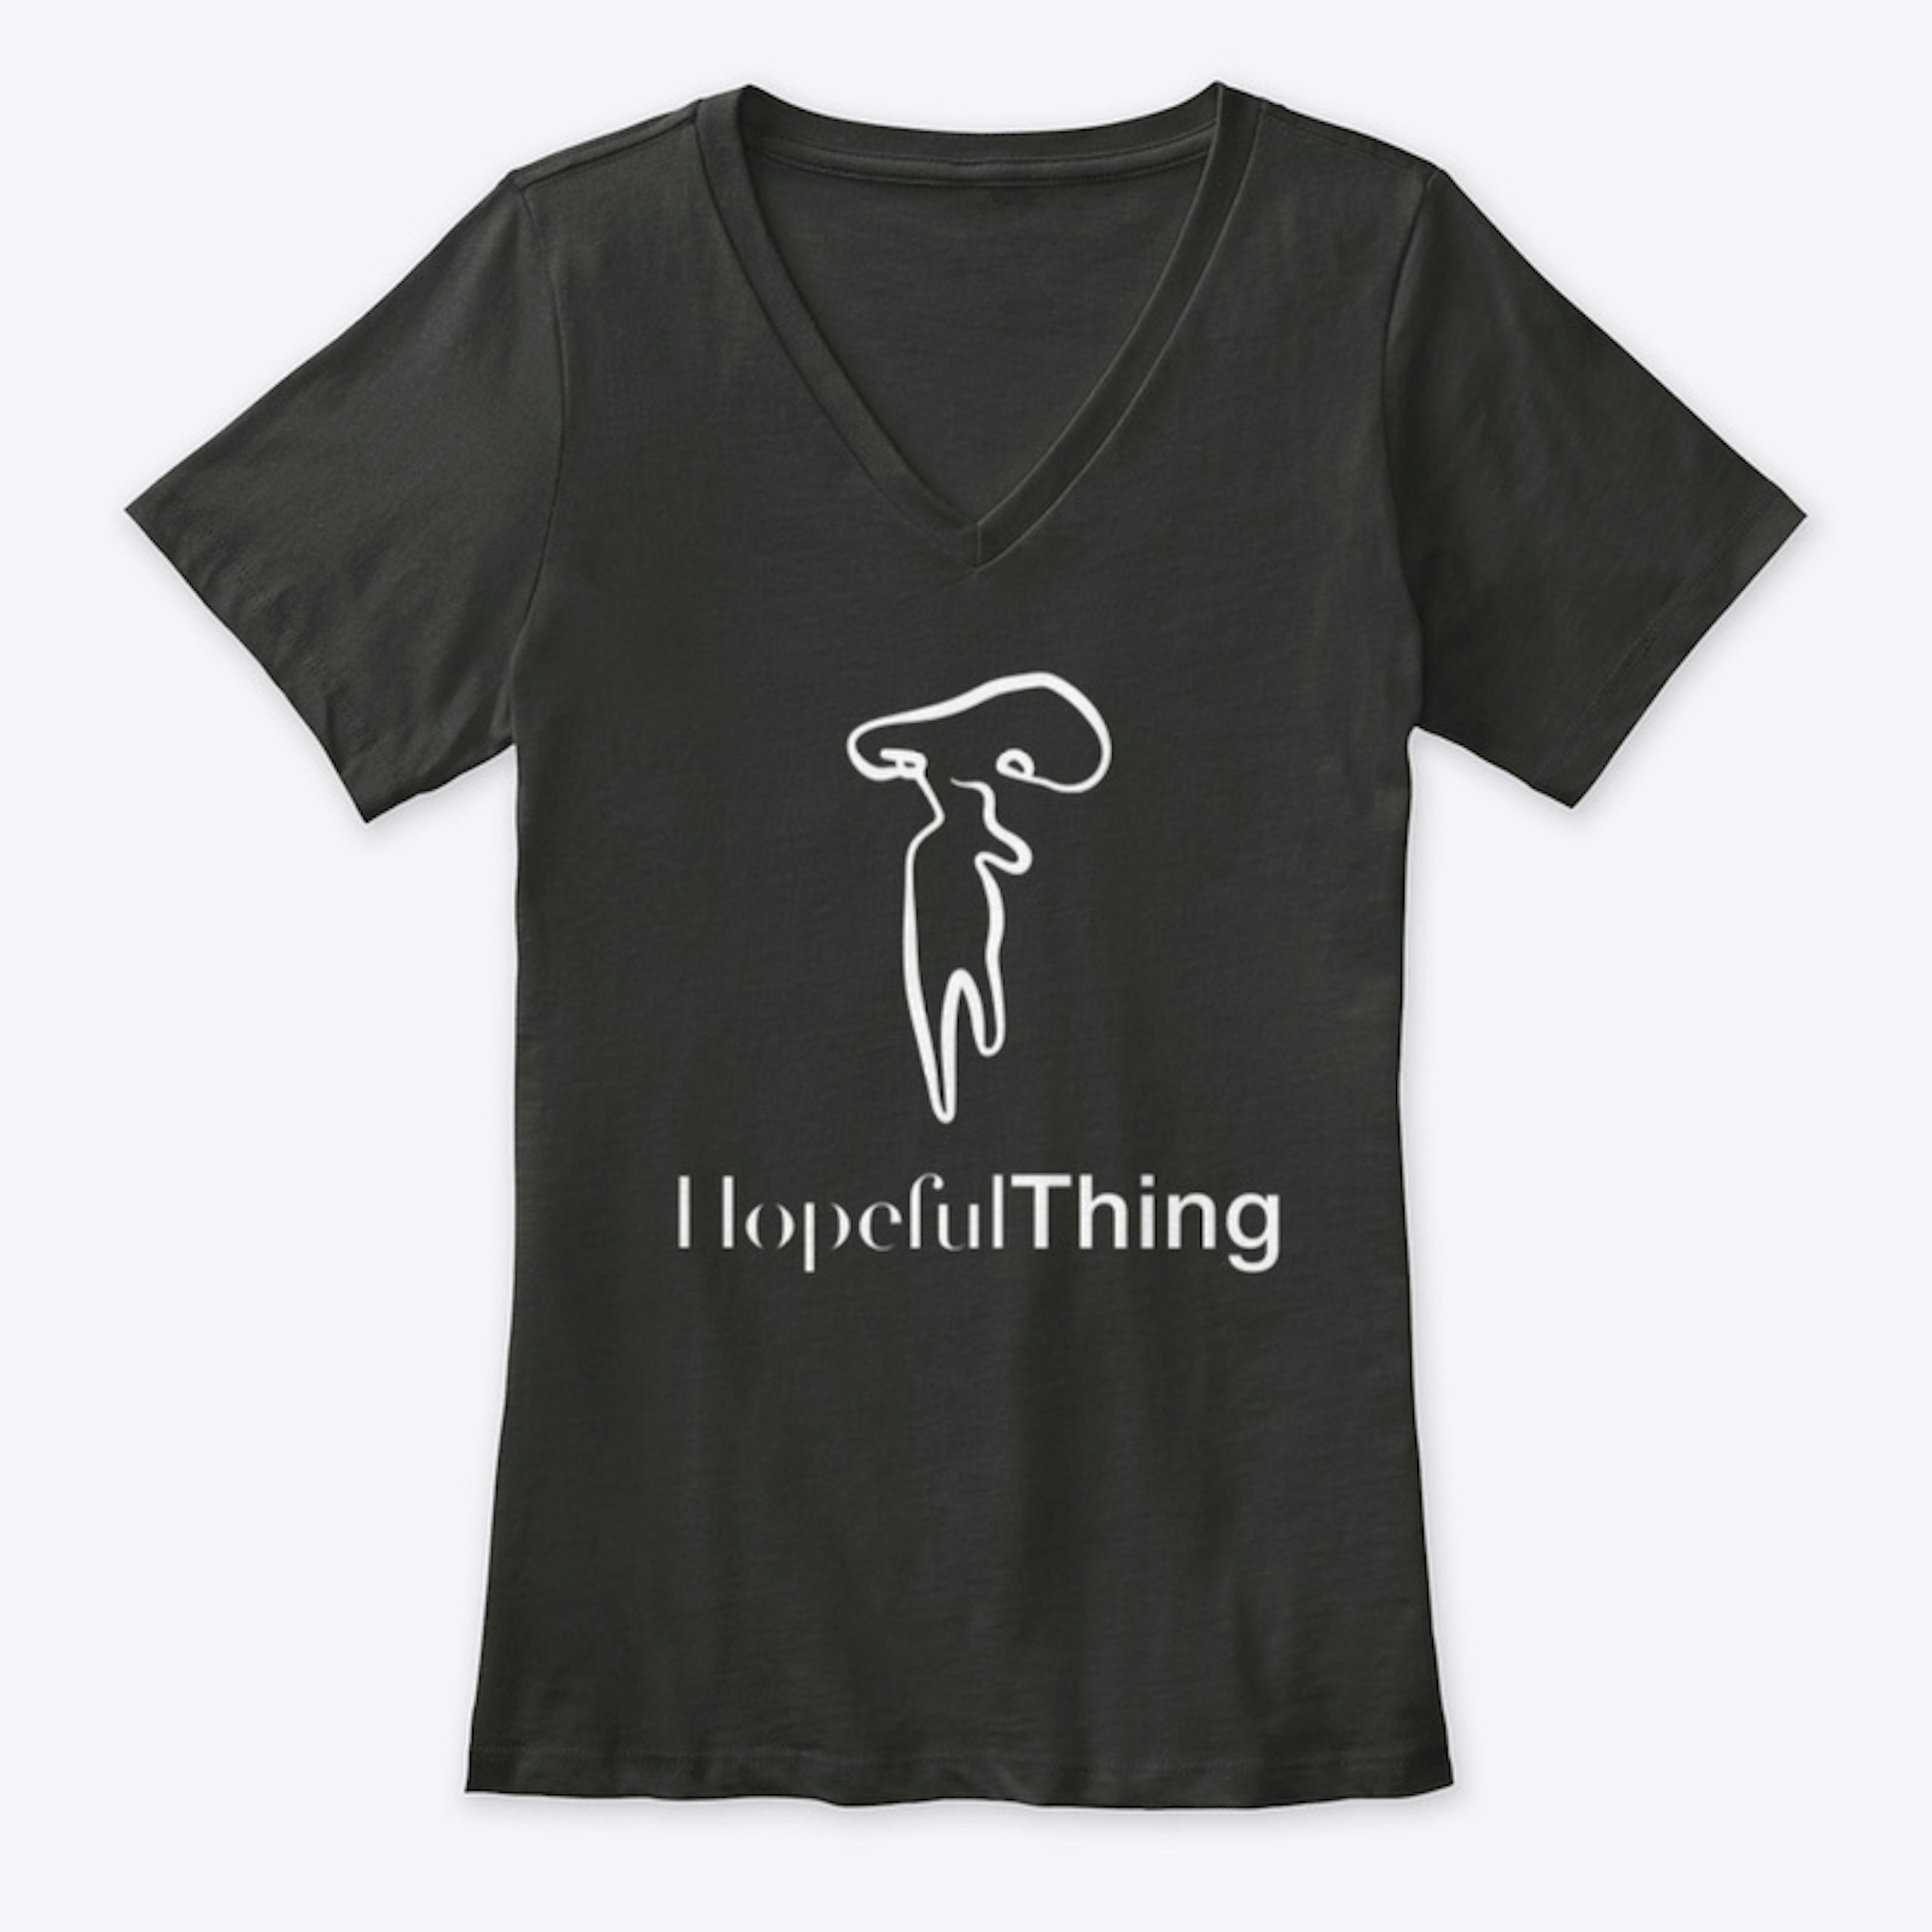 Hopeful Thing - Dark